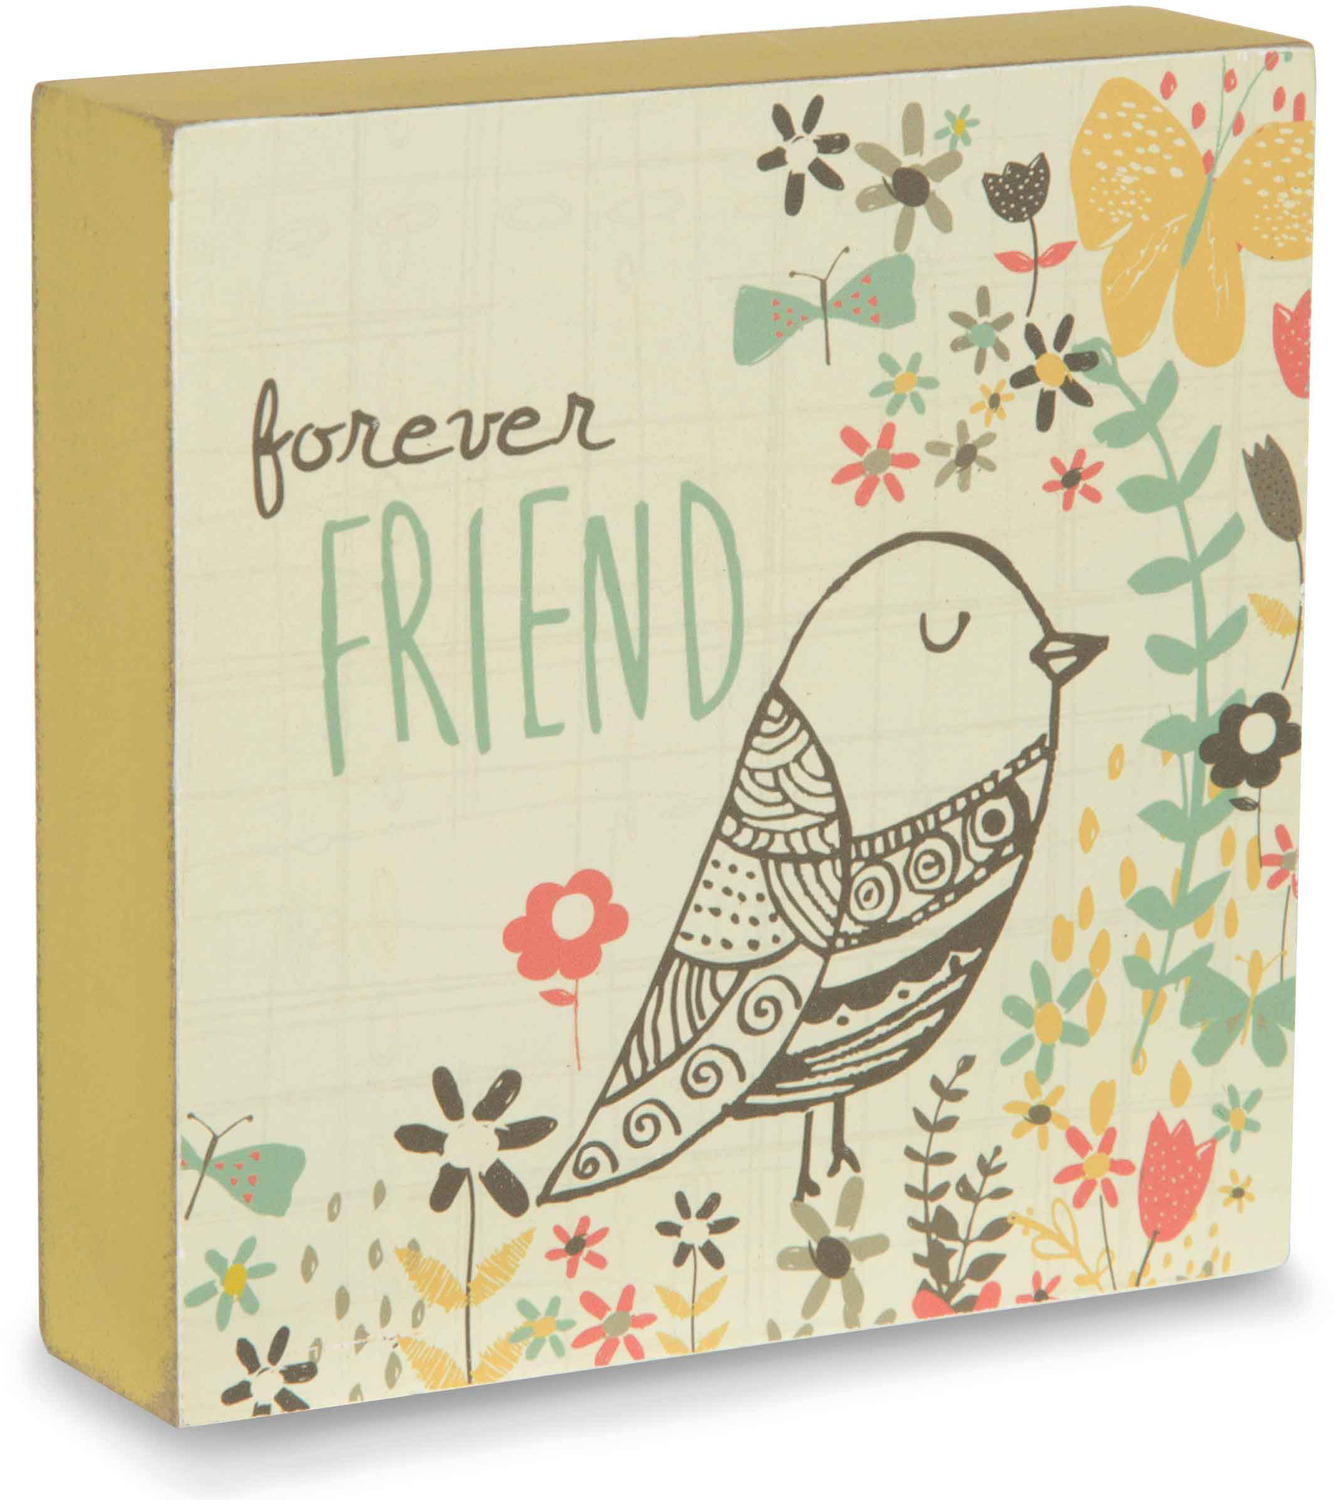 Forever Friend by Bloom by Amylee Weeks - <em>Friend</em> - Mini Plaque & Wall Art -